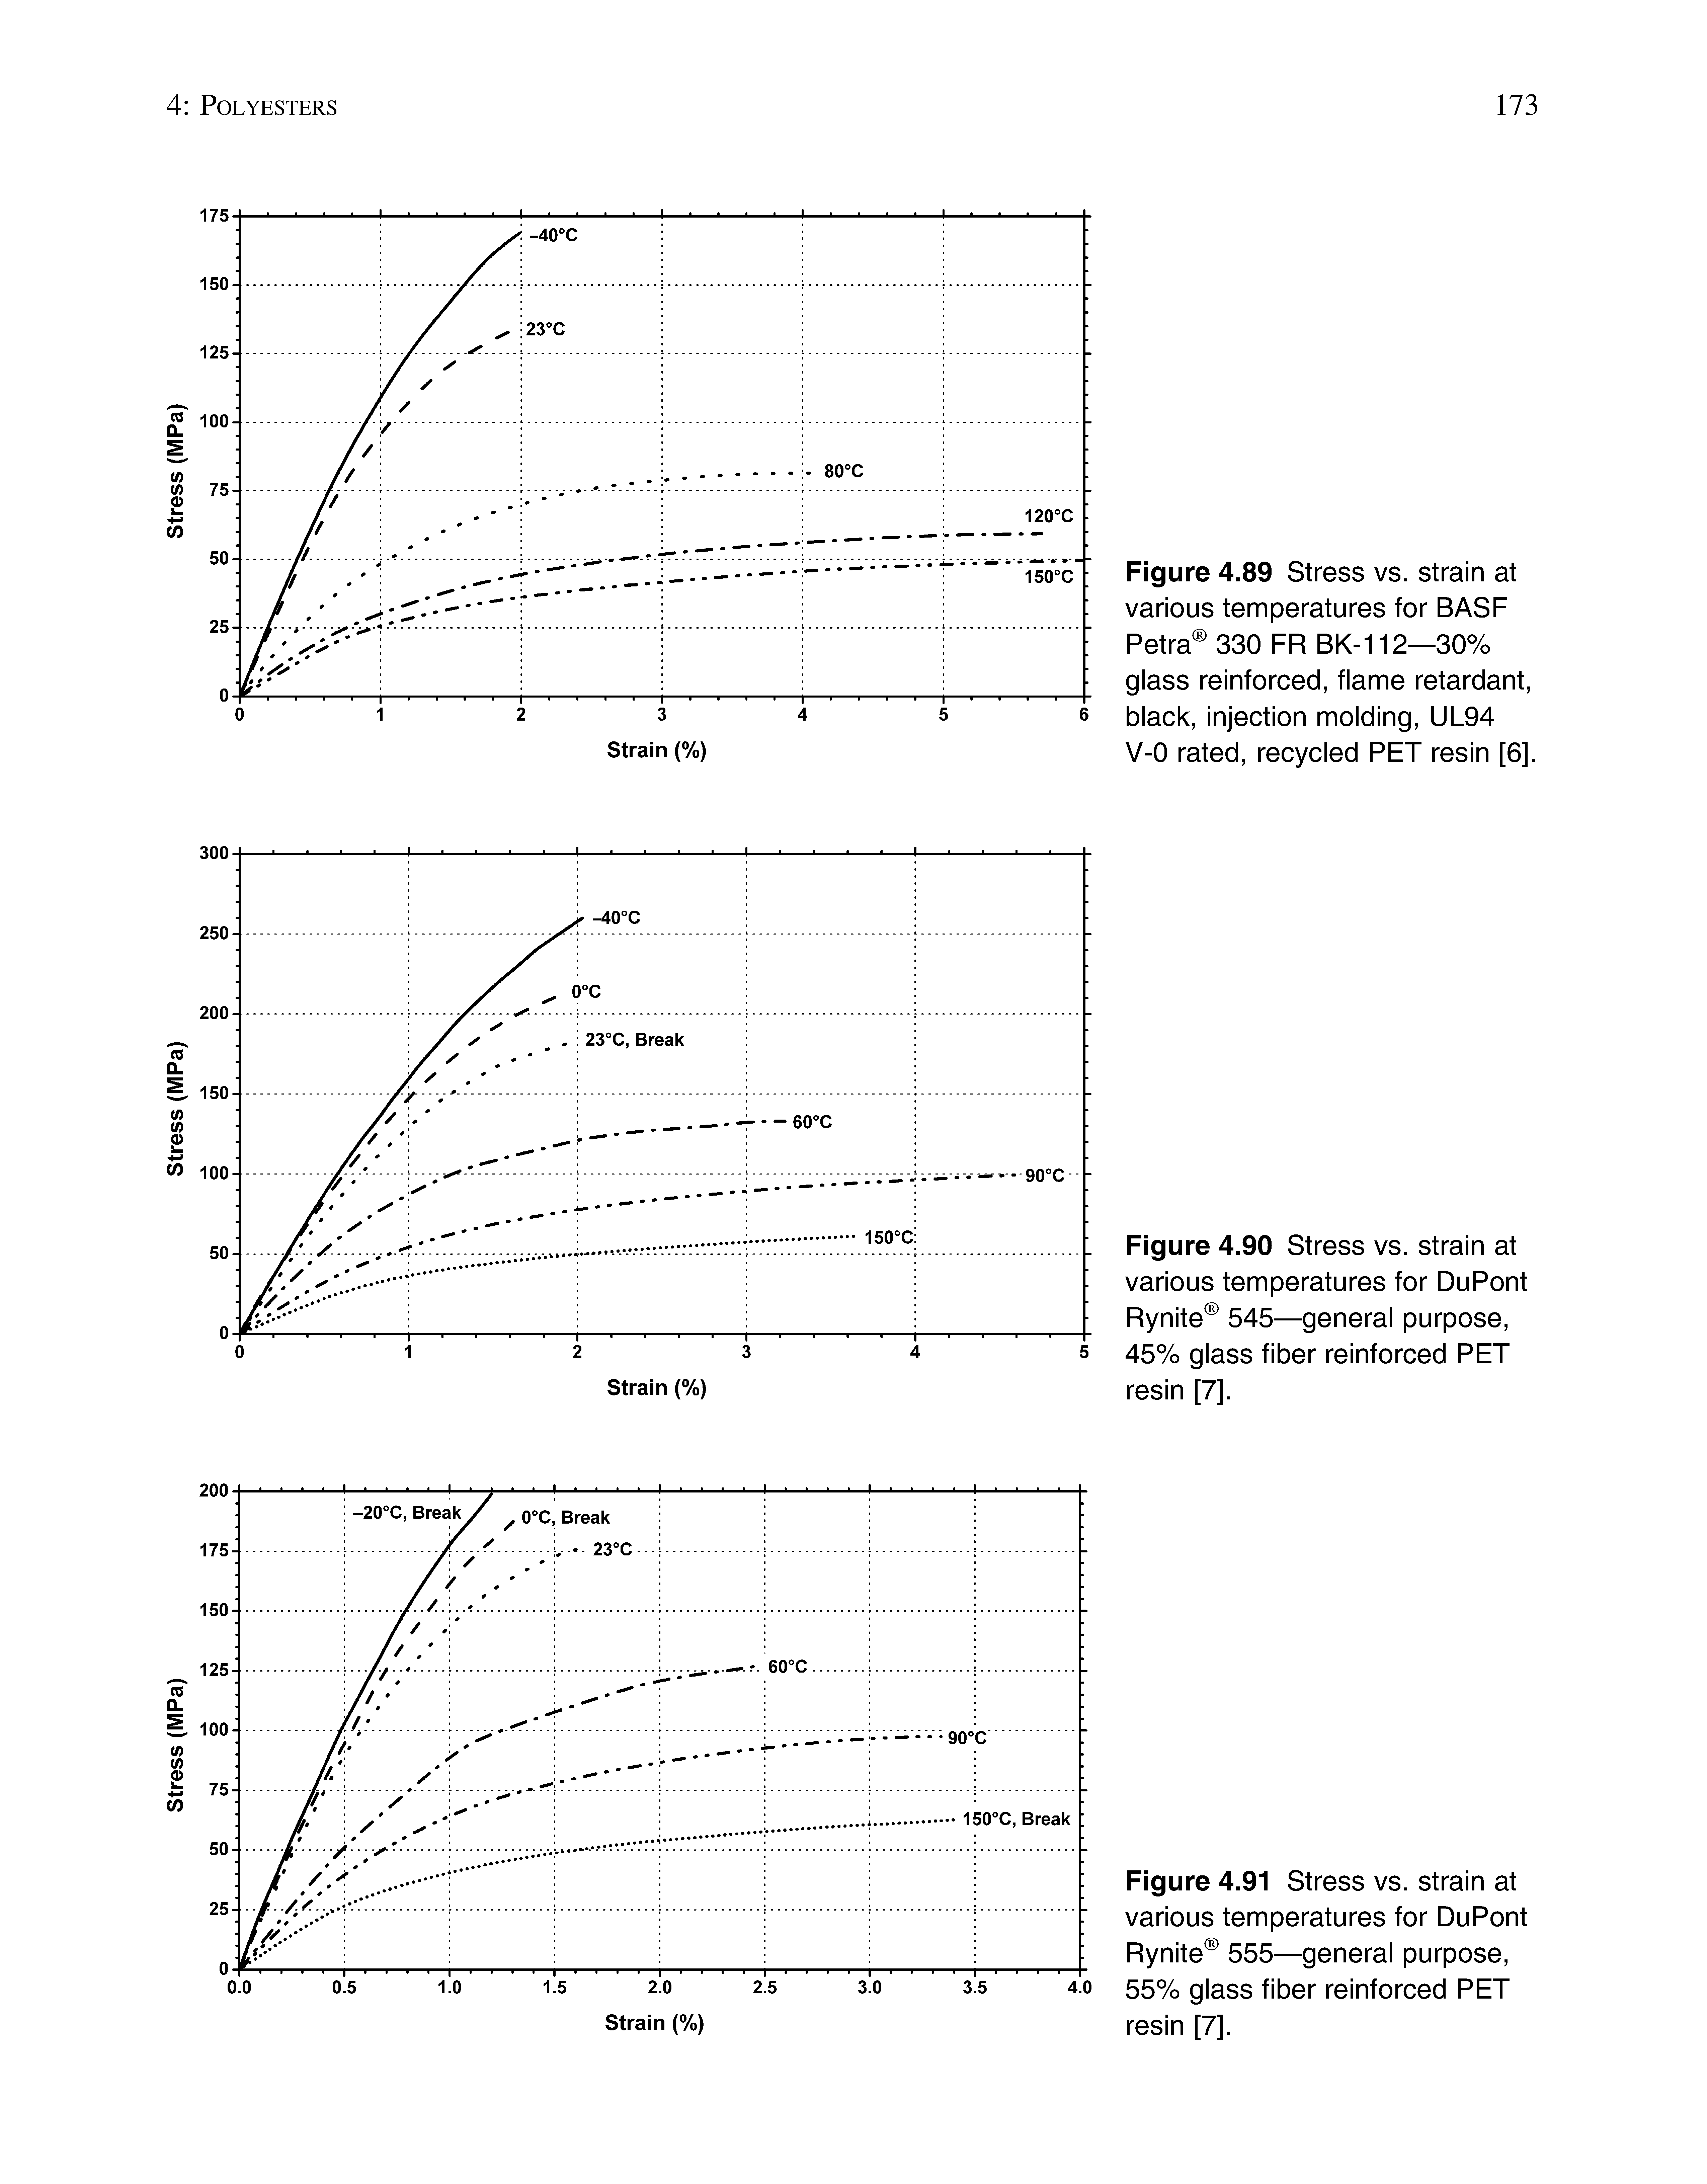 Figure 4.90 Stress vs. strain at various temperatures for DuPont Rynite 545—general purpose, 45% glass fiber reinforced PET resin [7].